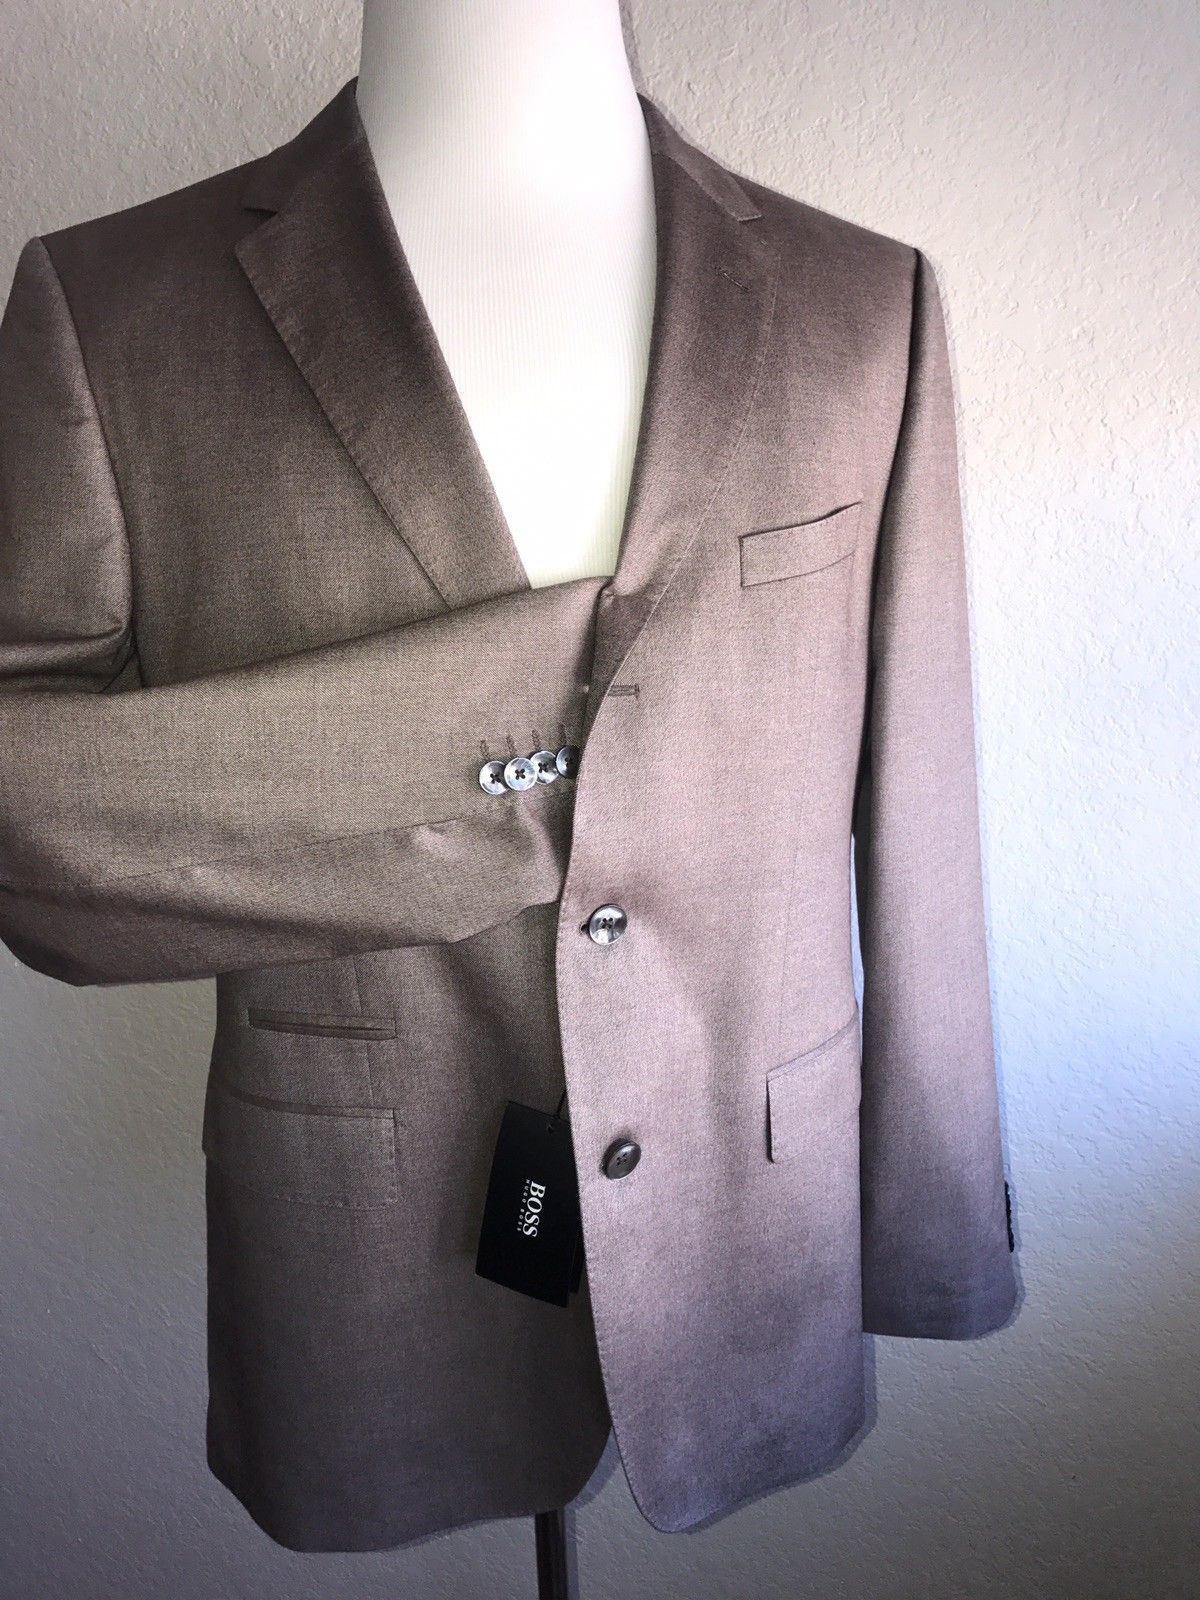 NWT $995 Boss Hugo Boss Johnston2 Silk Sport Coat Jacket Brown 42R US (52 Eu)